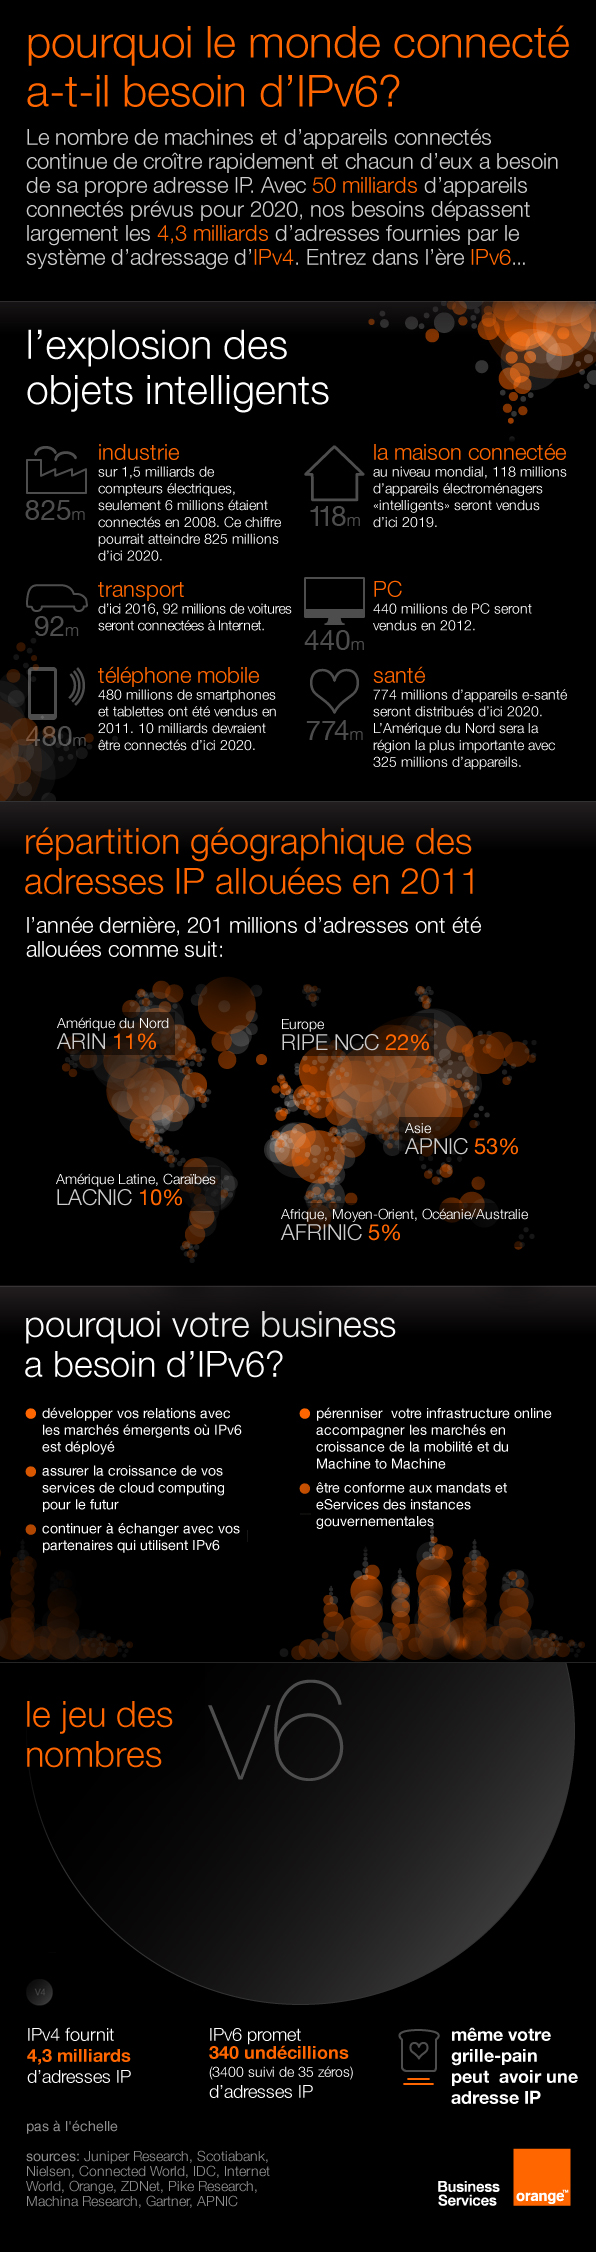 infographie ipv6